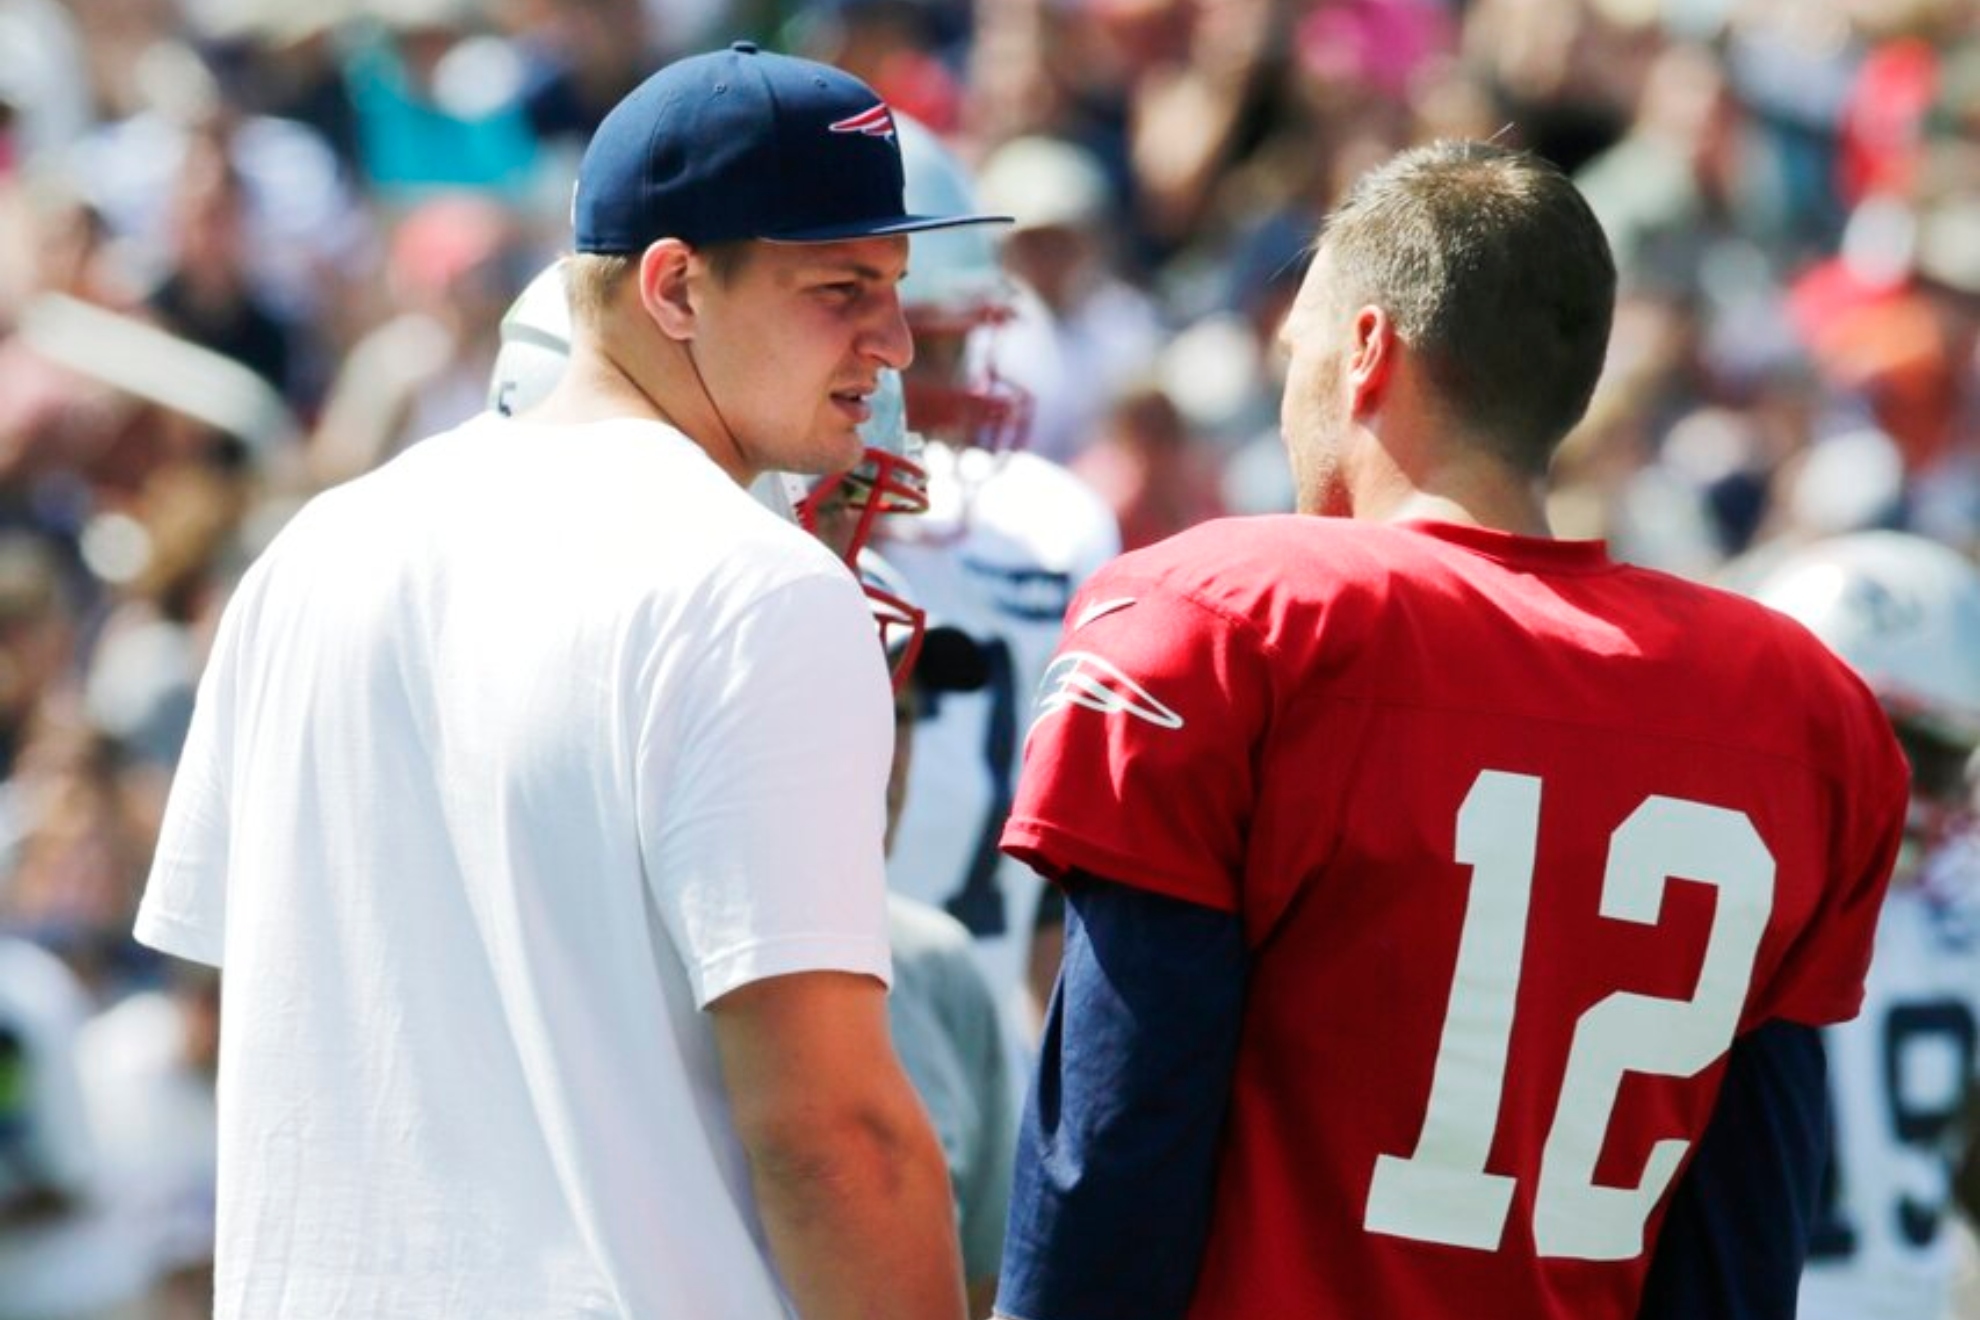 Brady and Gronk: Tom Brady and Rob Gronkowski's Friendship Through